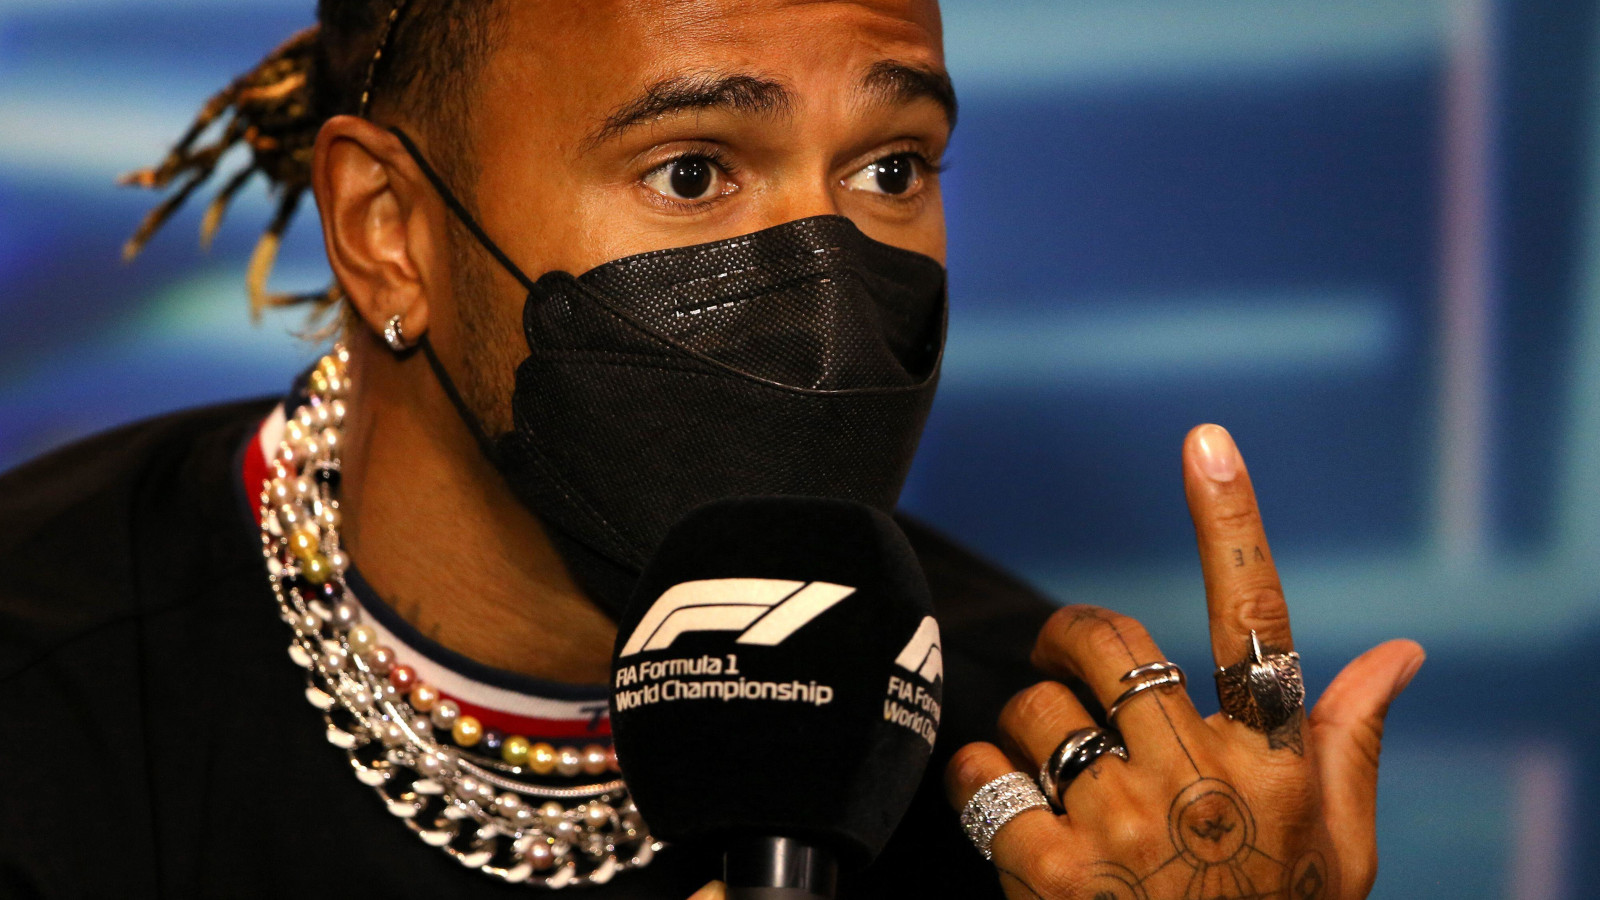 Lewis Hamilton wearing jewellery. Miami May 2022